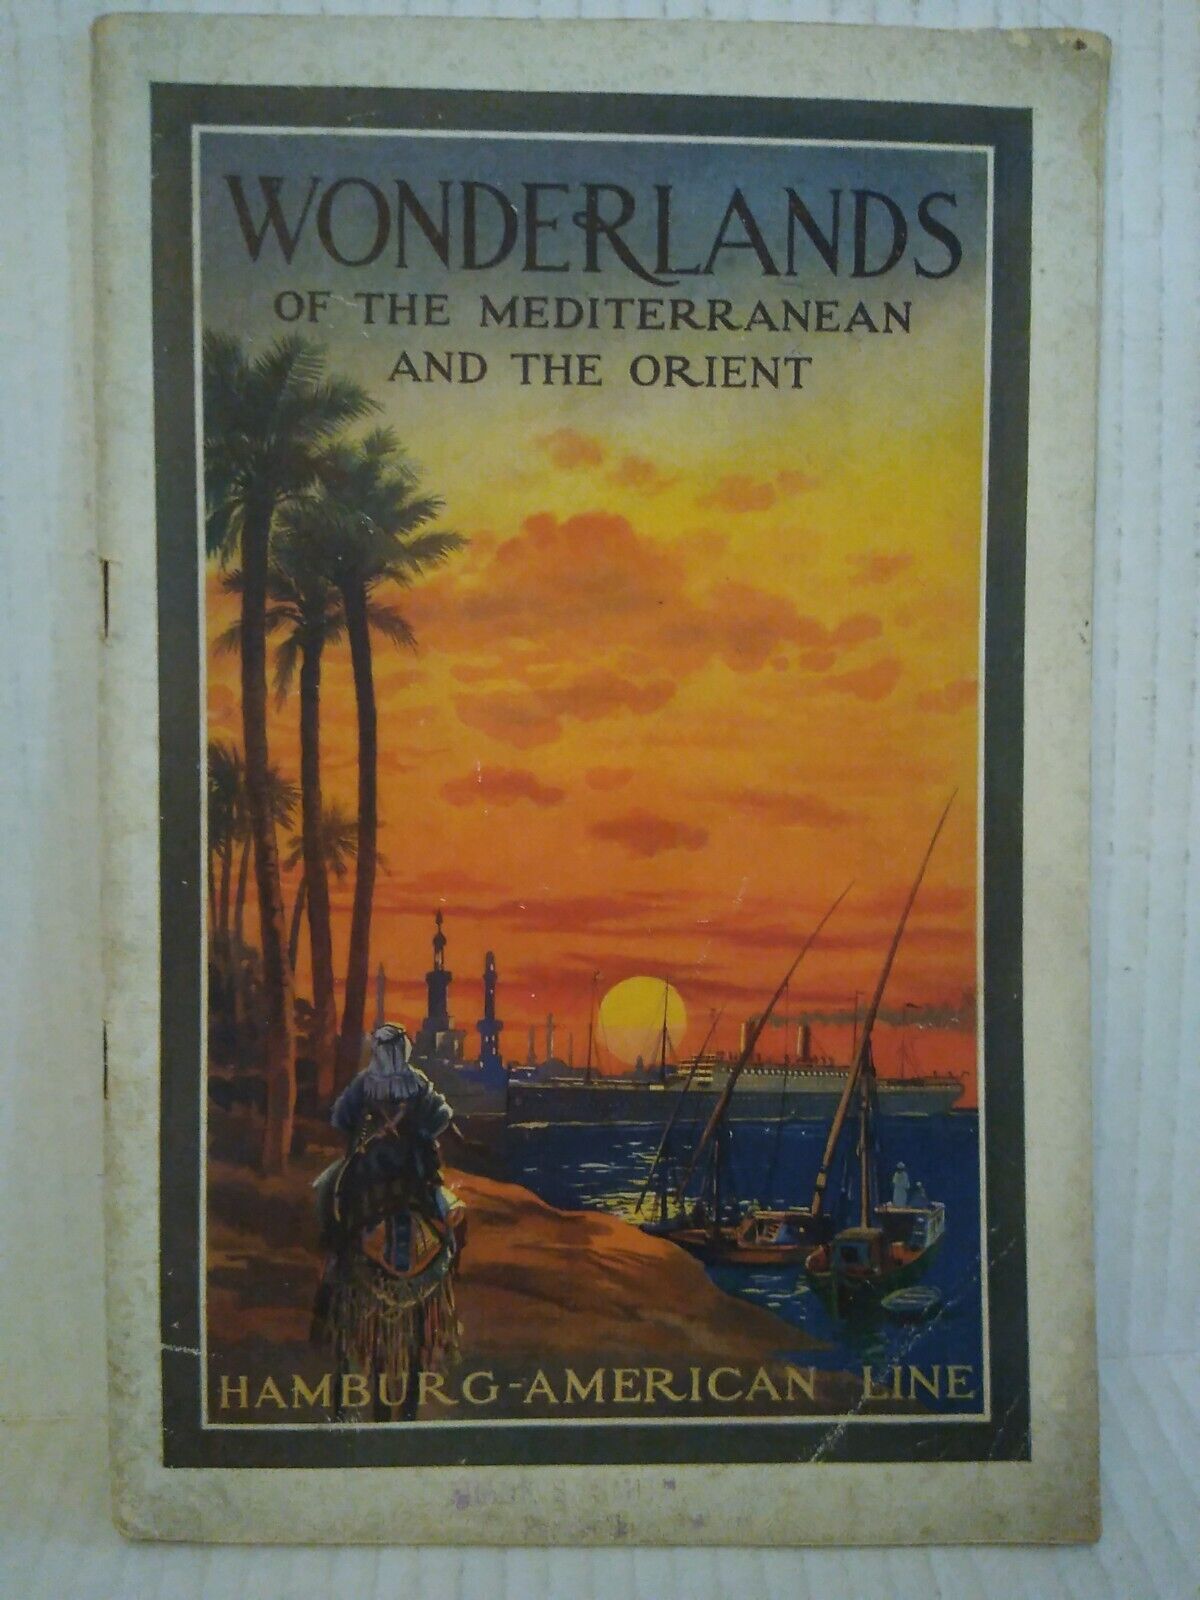 Wonderlands of the Mediterranean and the orient - Hamburg-American Line 1913